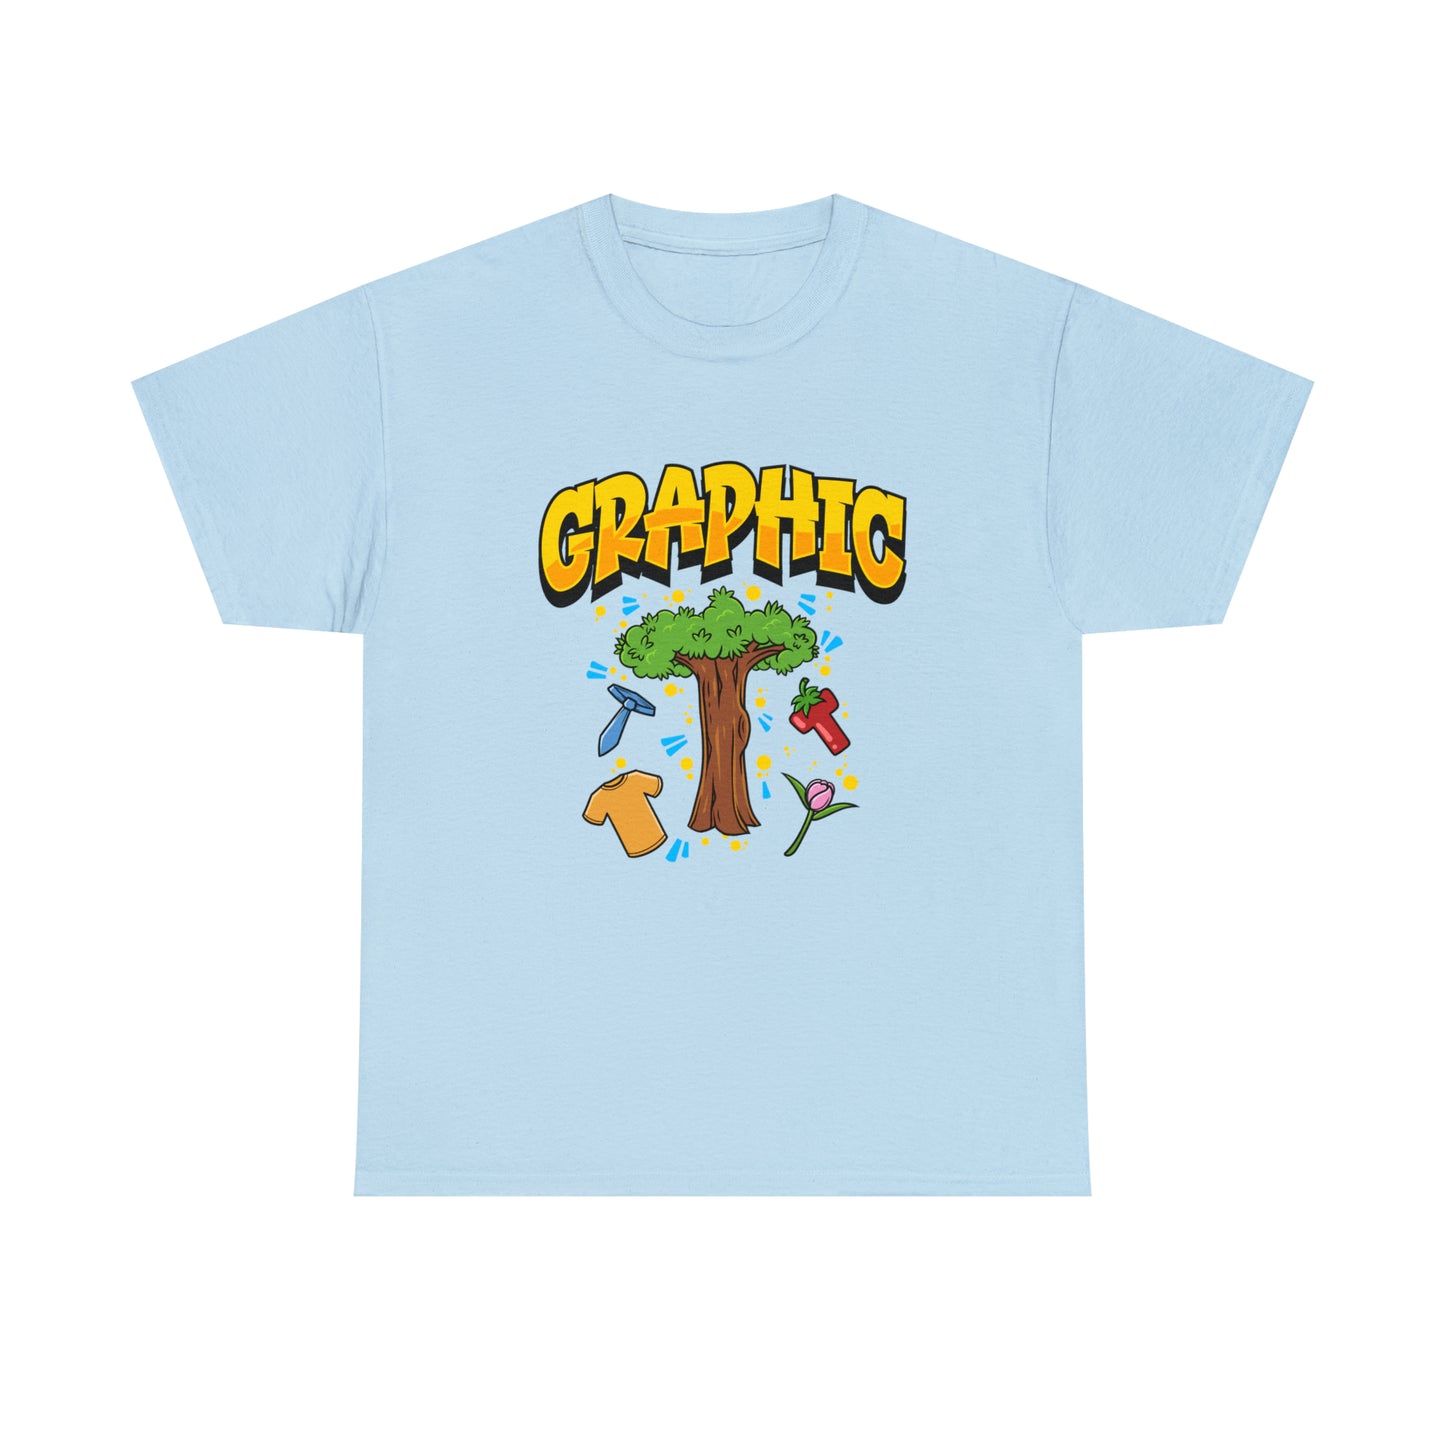 Custom Parody T-shirt, Graphic T's design